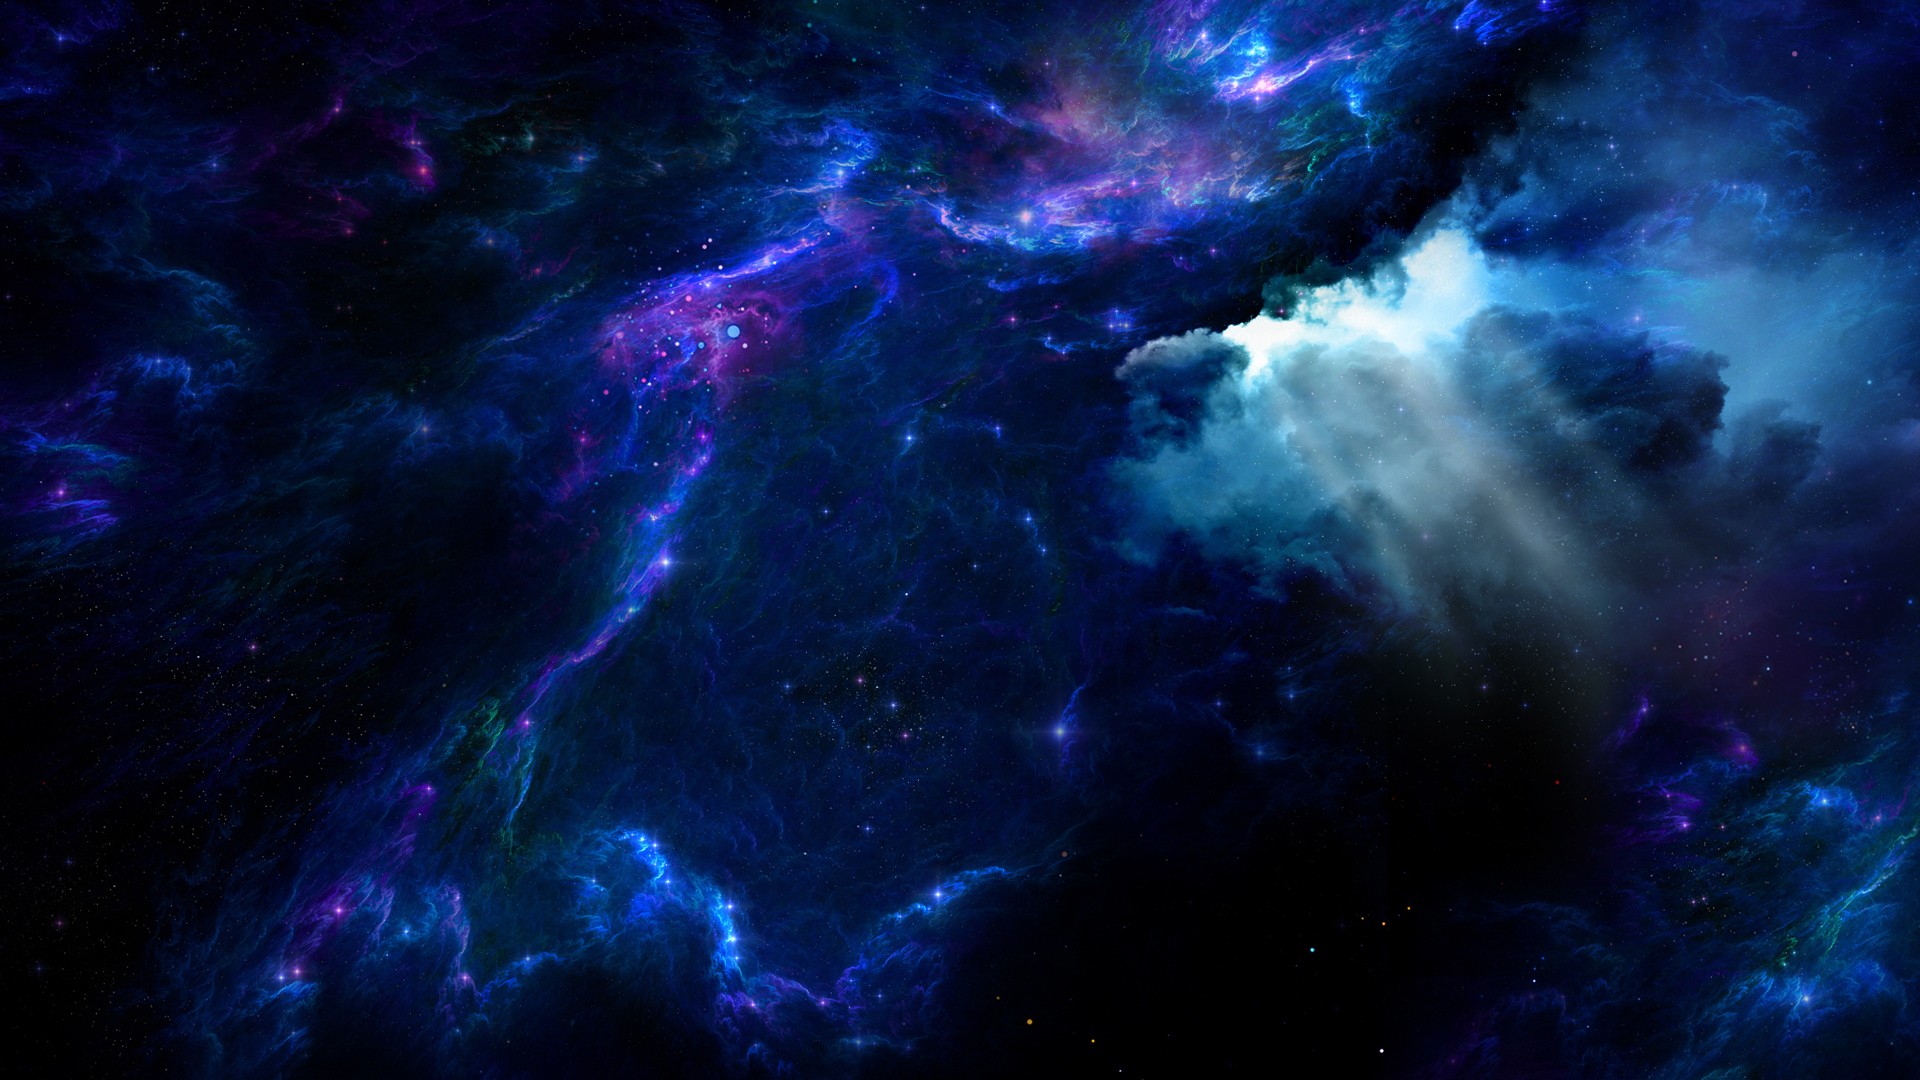 Download Wallpaper Very beautiful dark blue space nebula   1920x1080